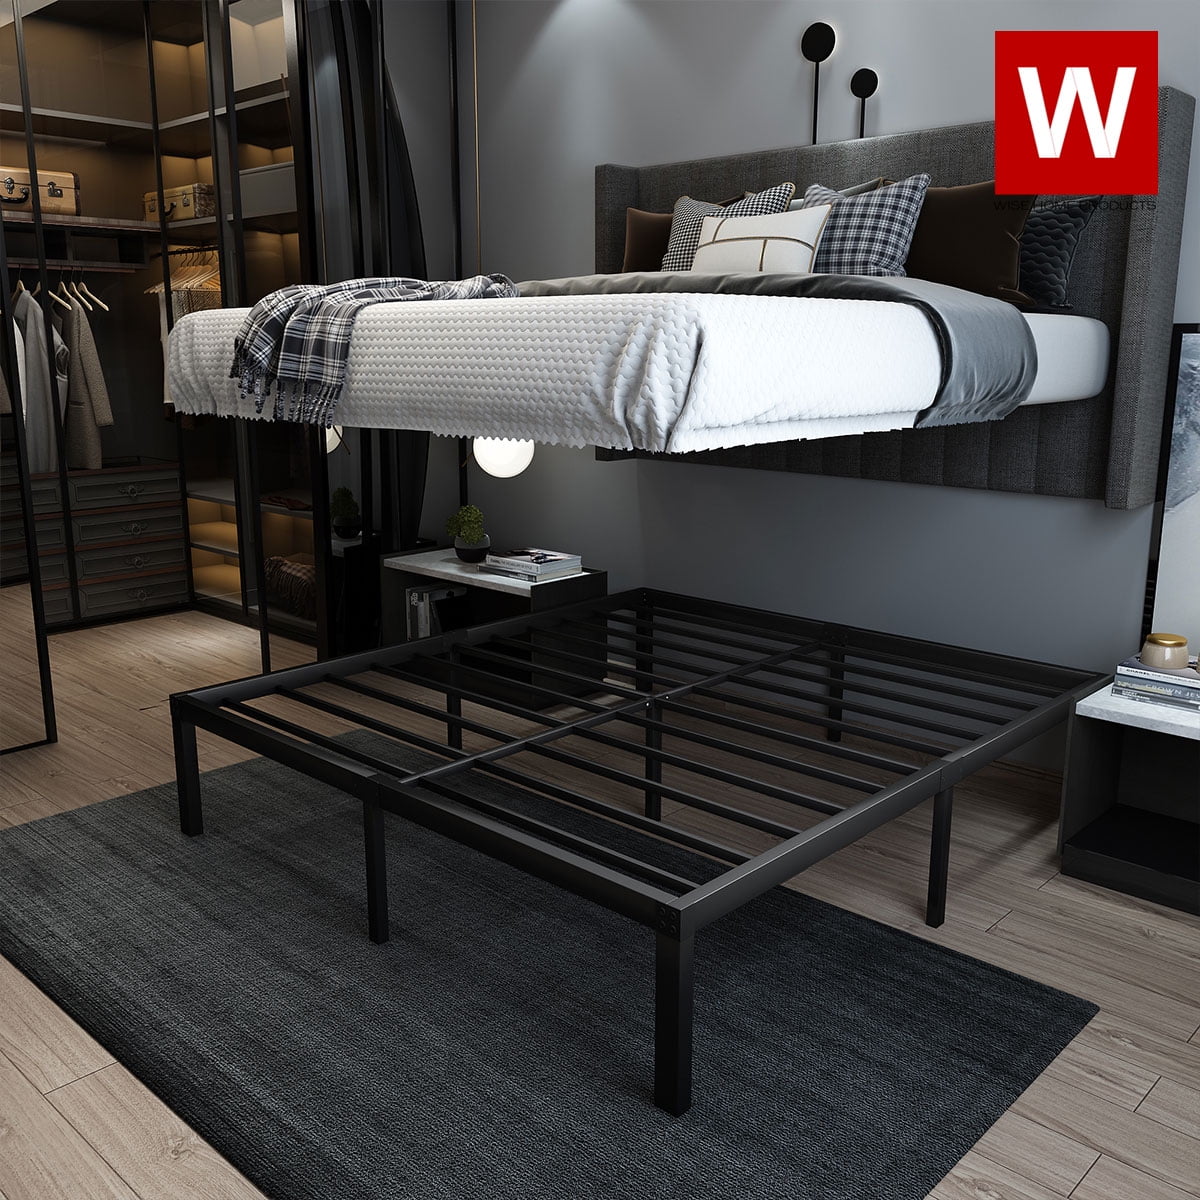 King Size Metal Platform Bed Frame With, King Size Bed Frame With Shelves